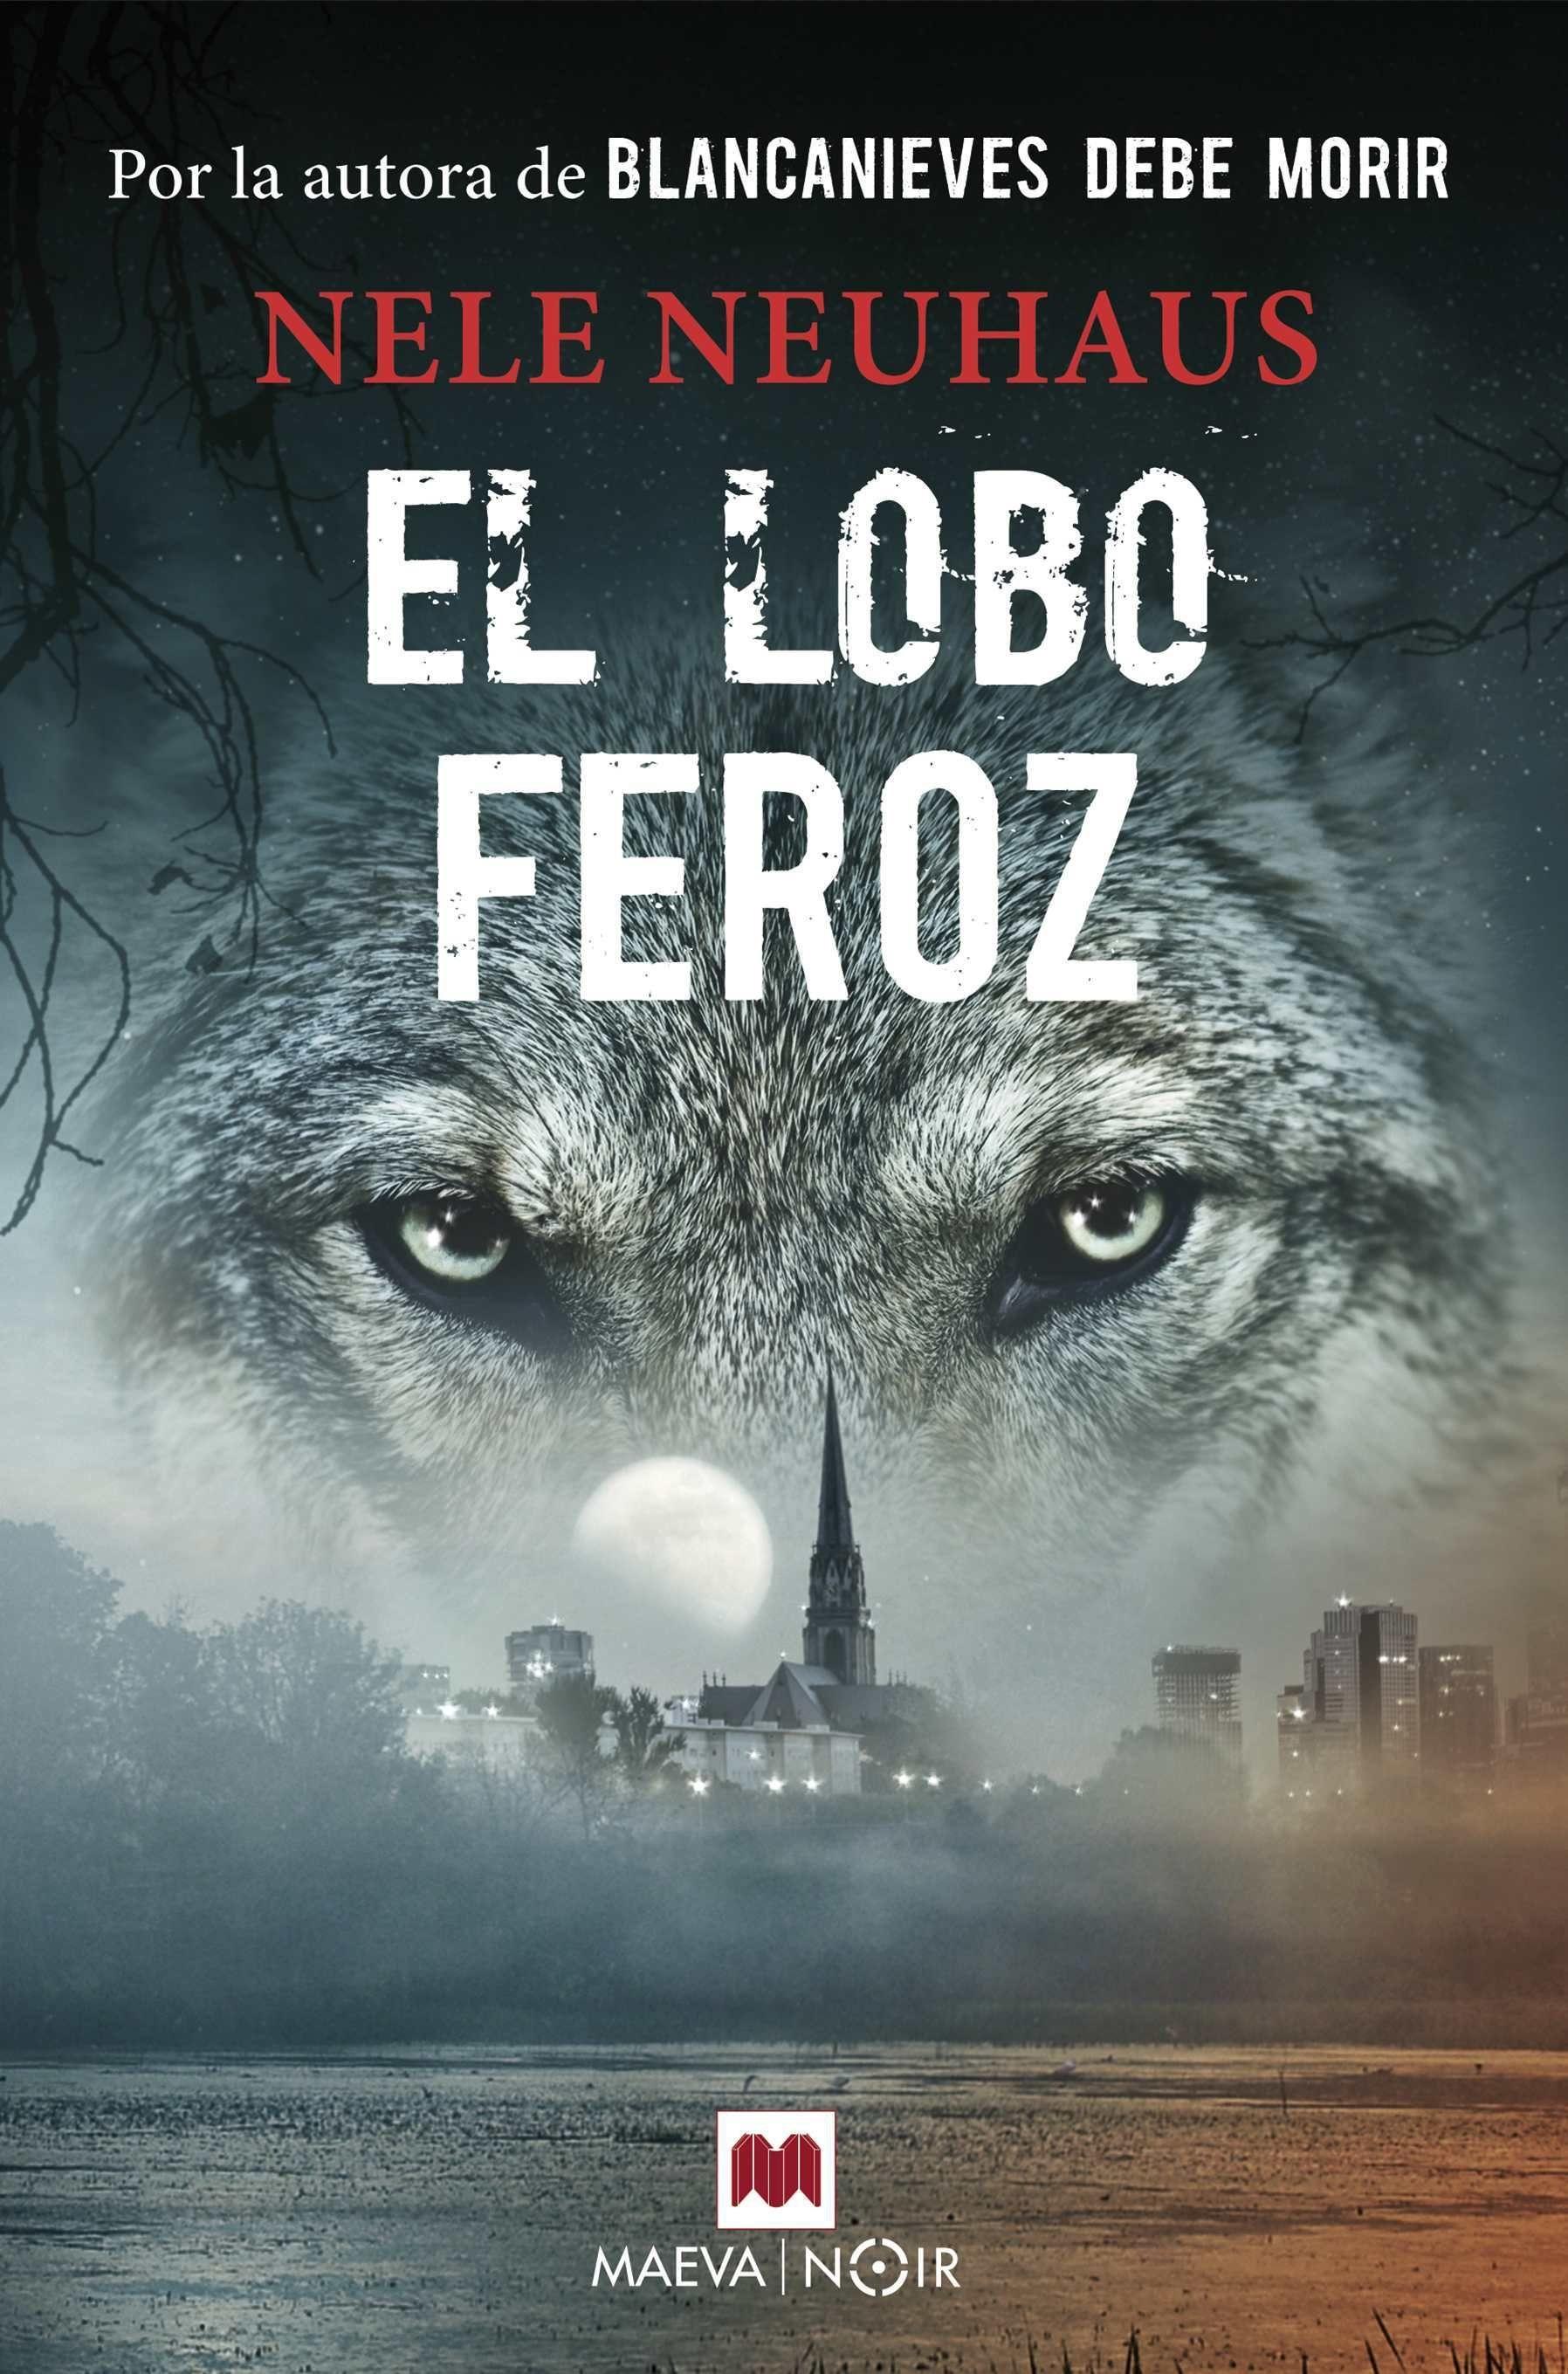 Lobo Feroz. 